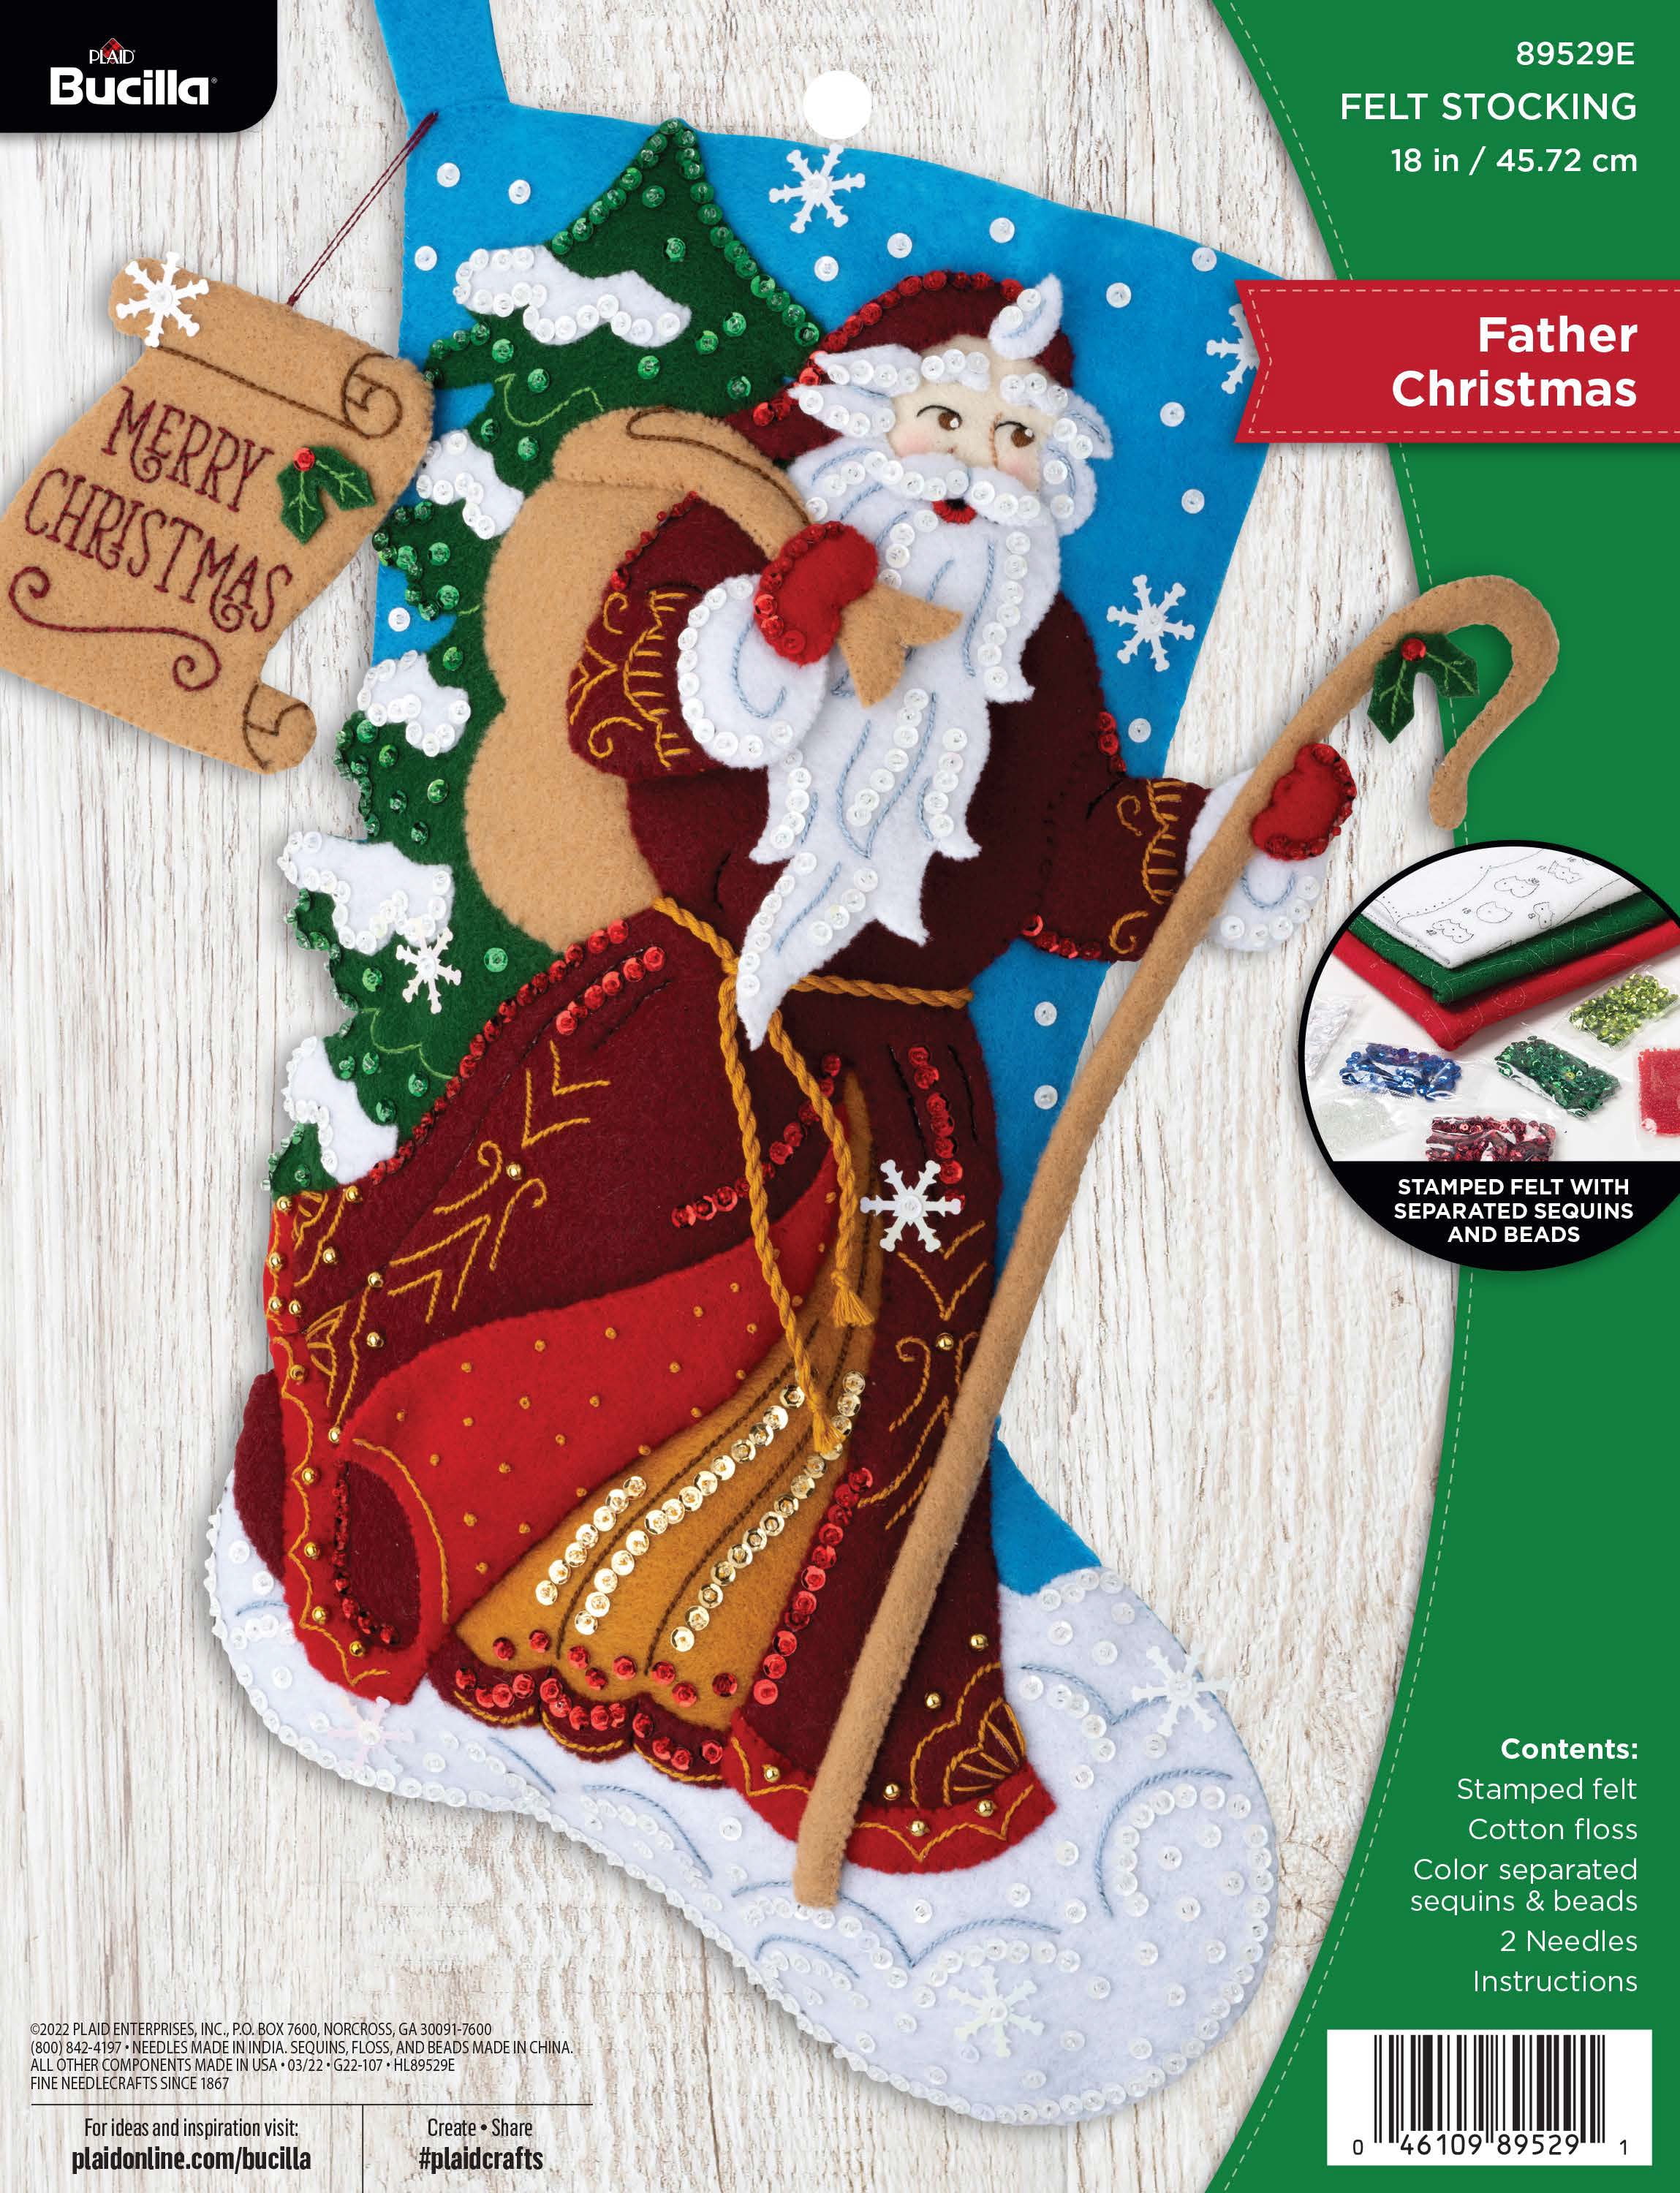  Bucilla 18-Inch Christmas Stocking Felt Applique Kit, 86280  Santa's Secret